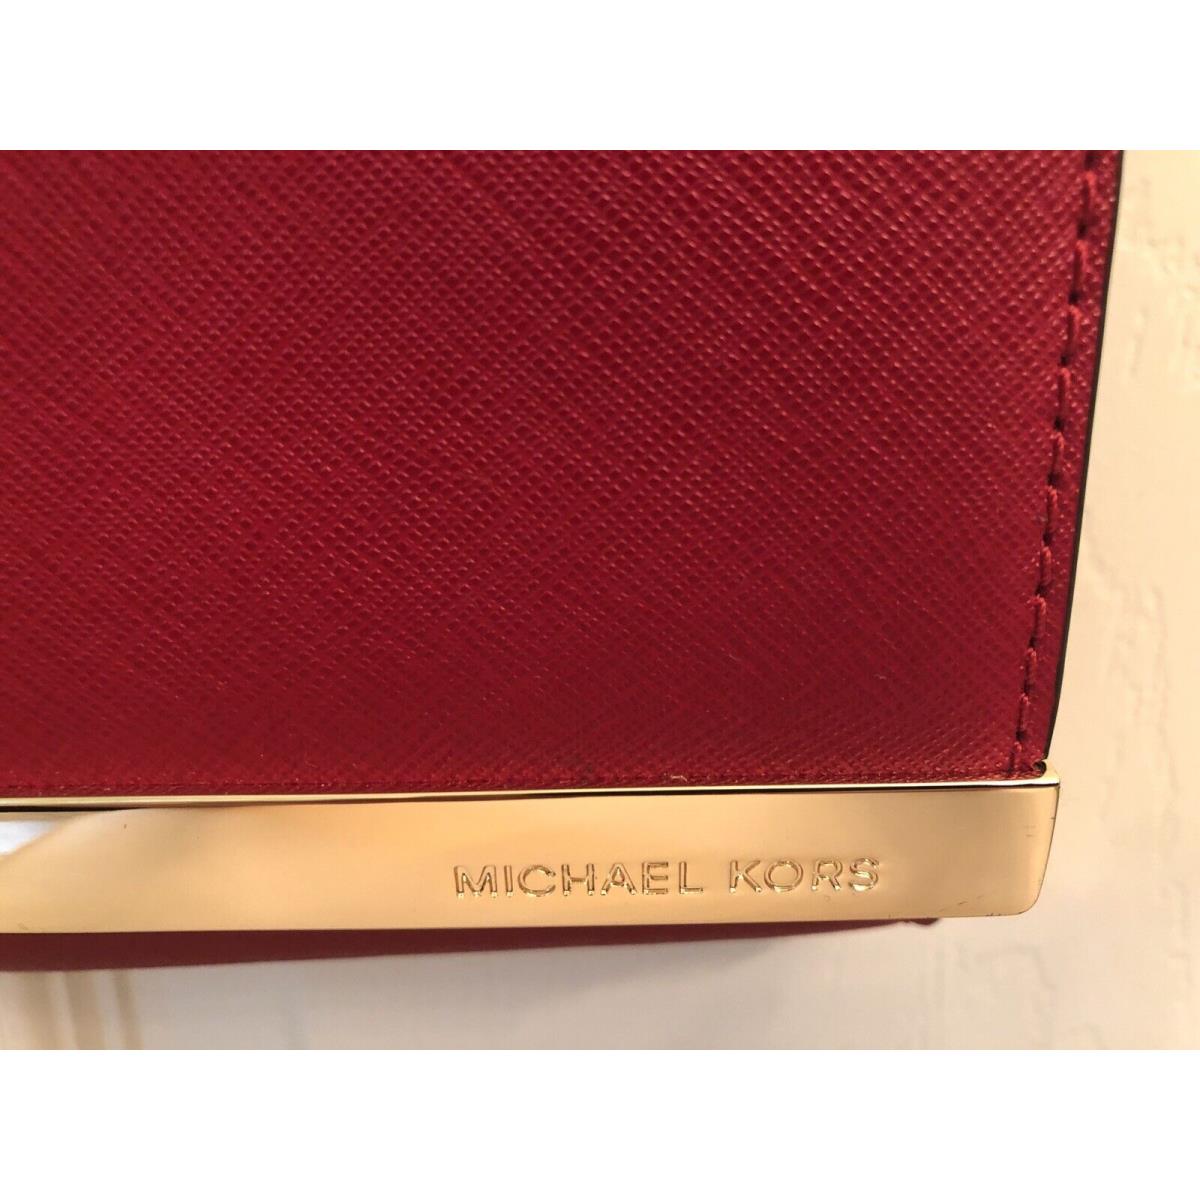 Michael Kors Red Leather Handbag Shoulder Bag Clutch Woman`s